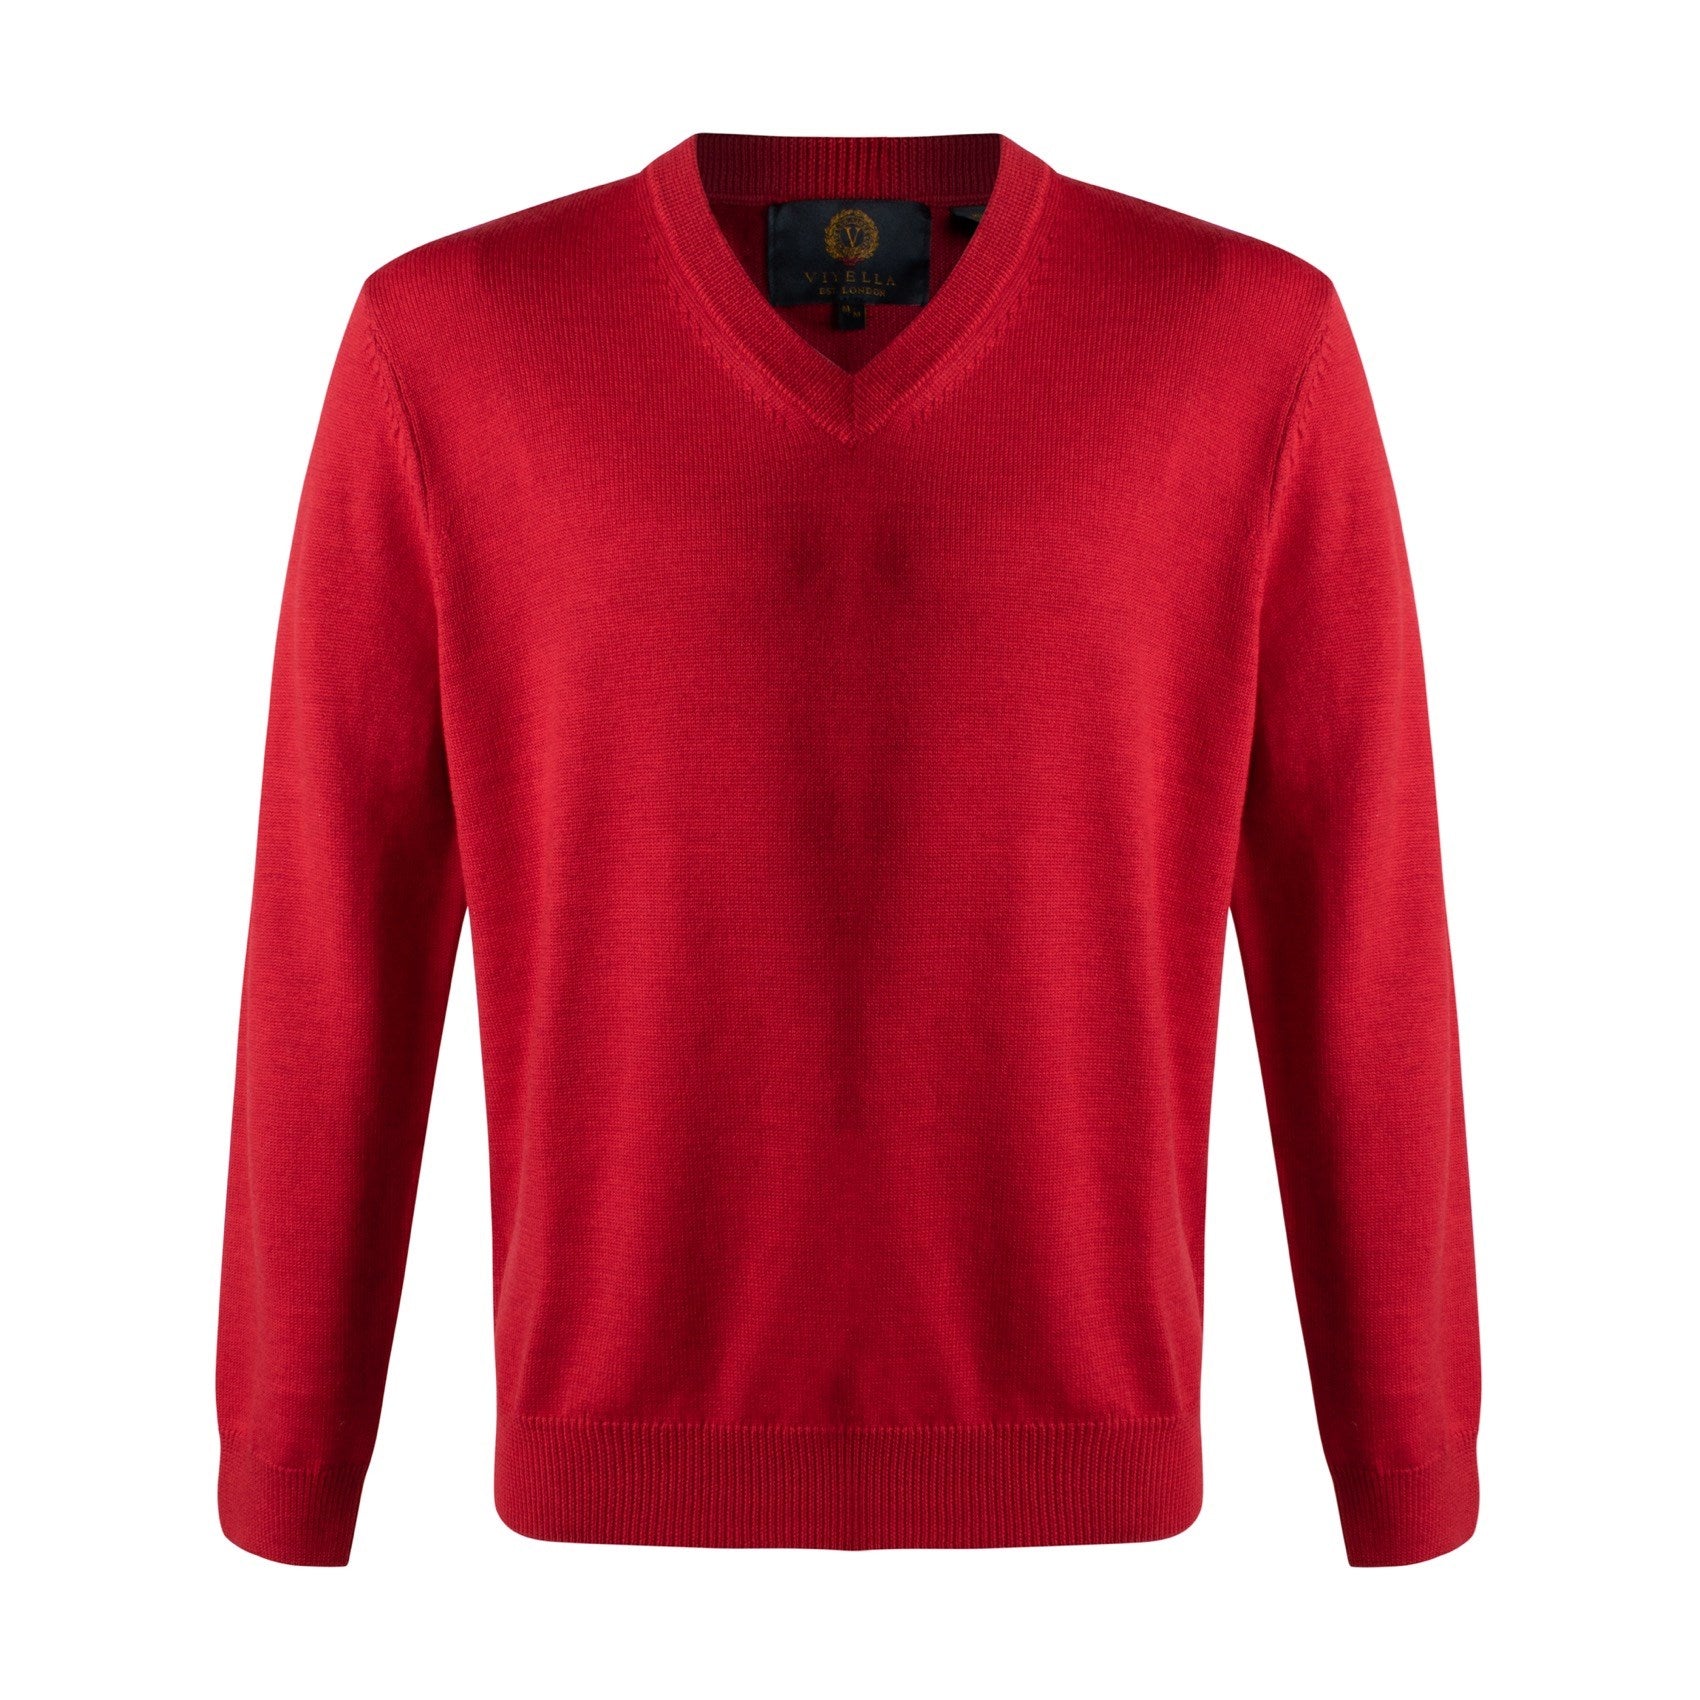 Extra Fine 'Zegna Baruffa' Merino Wool V-Neck Sweater in Admiral Red by Viyella